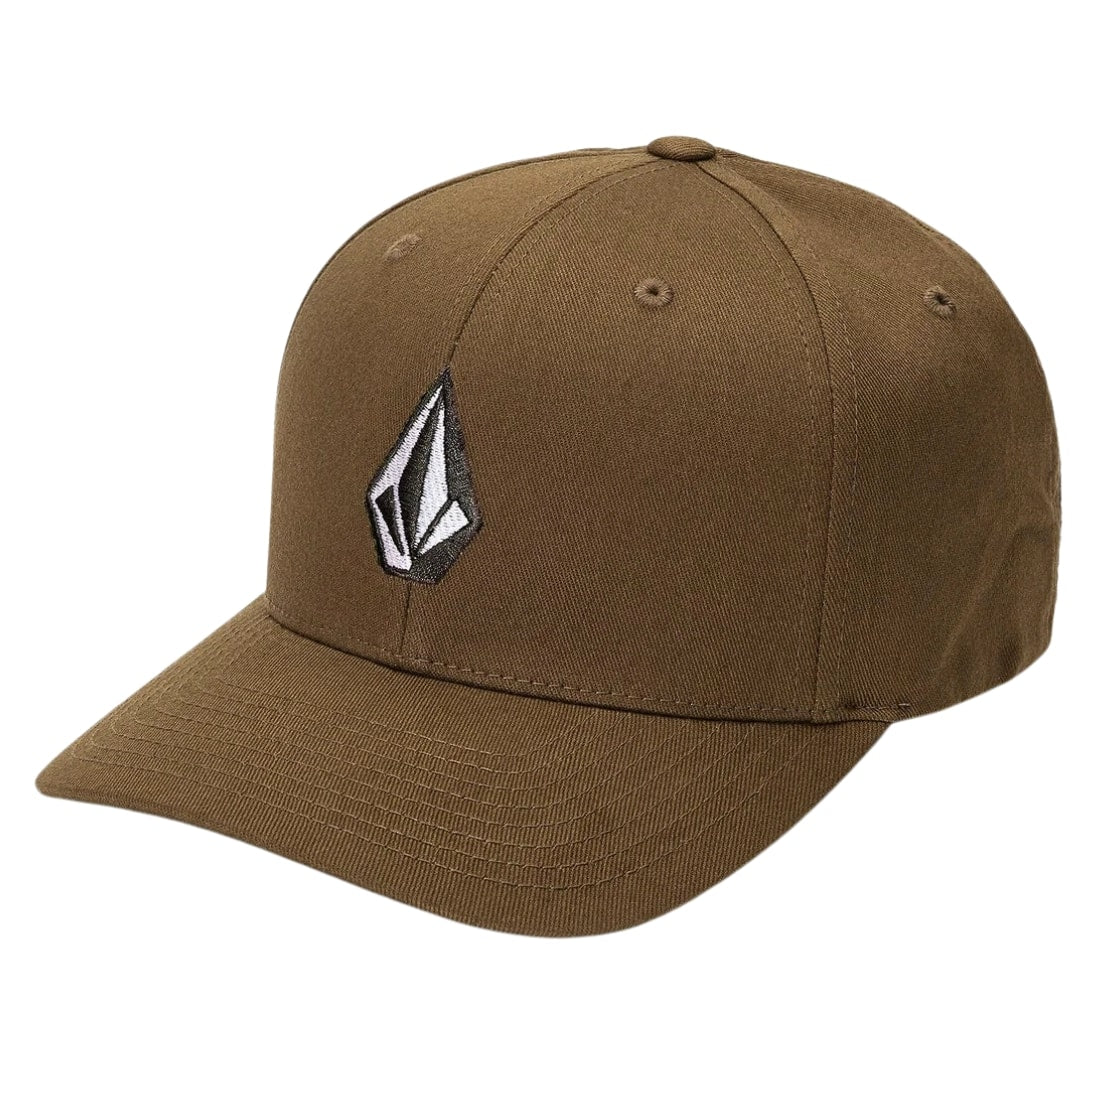 Volcom Full Stone Flexfit Cap Hat - Rubber - Baseball Cap by Volcom